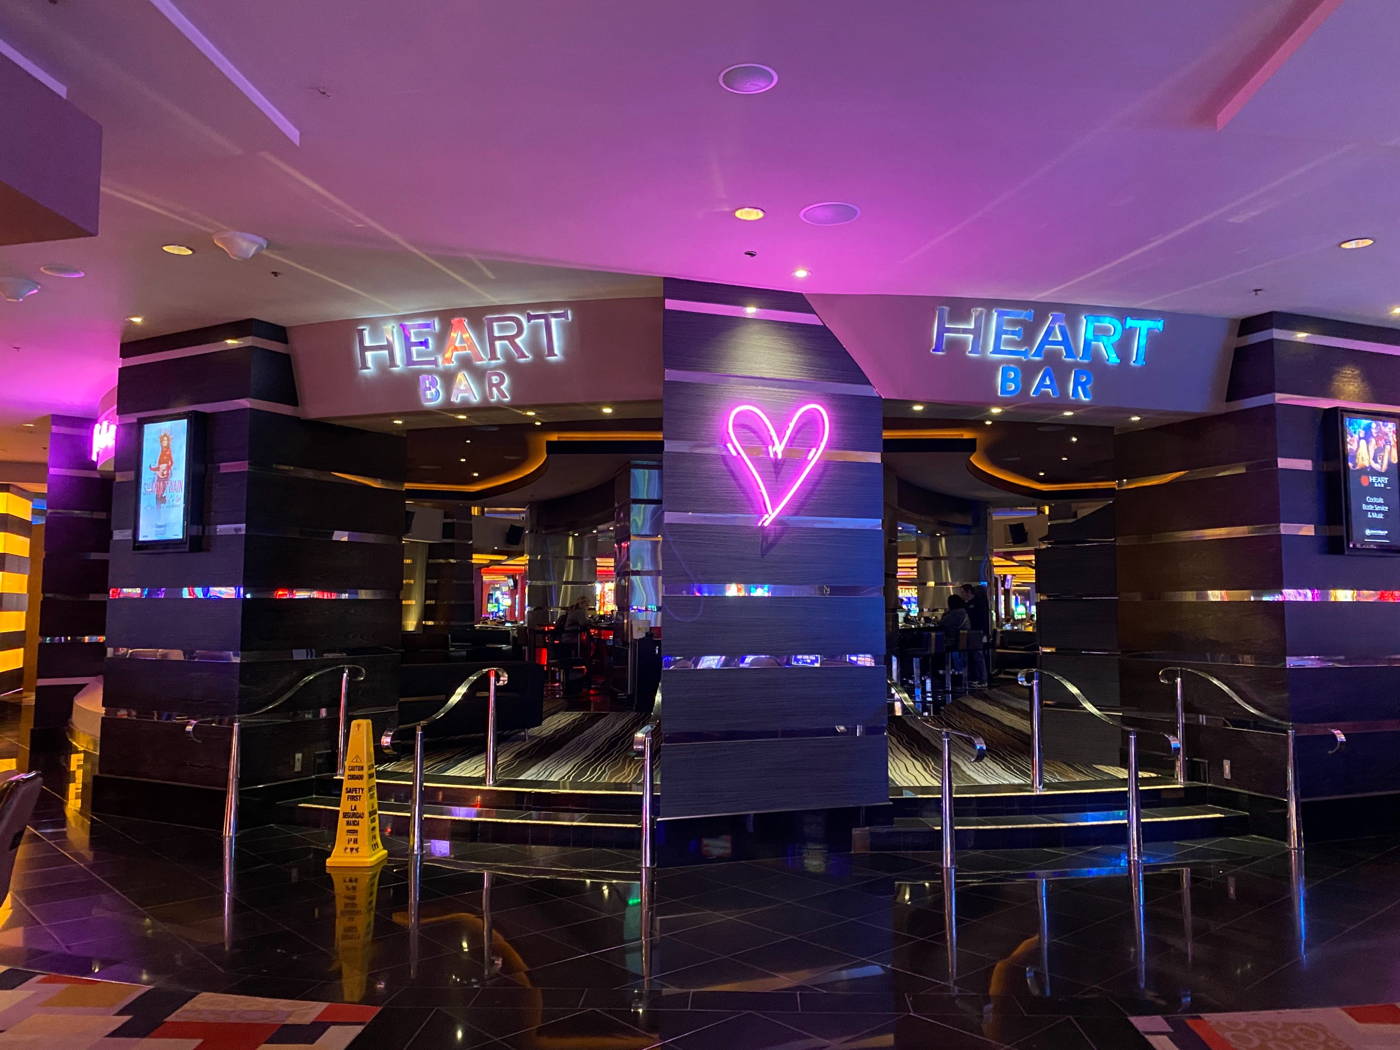 The Heart Bar at Planet Hollywood Las Vegas